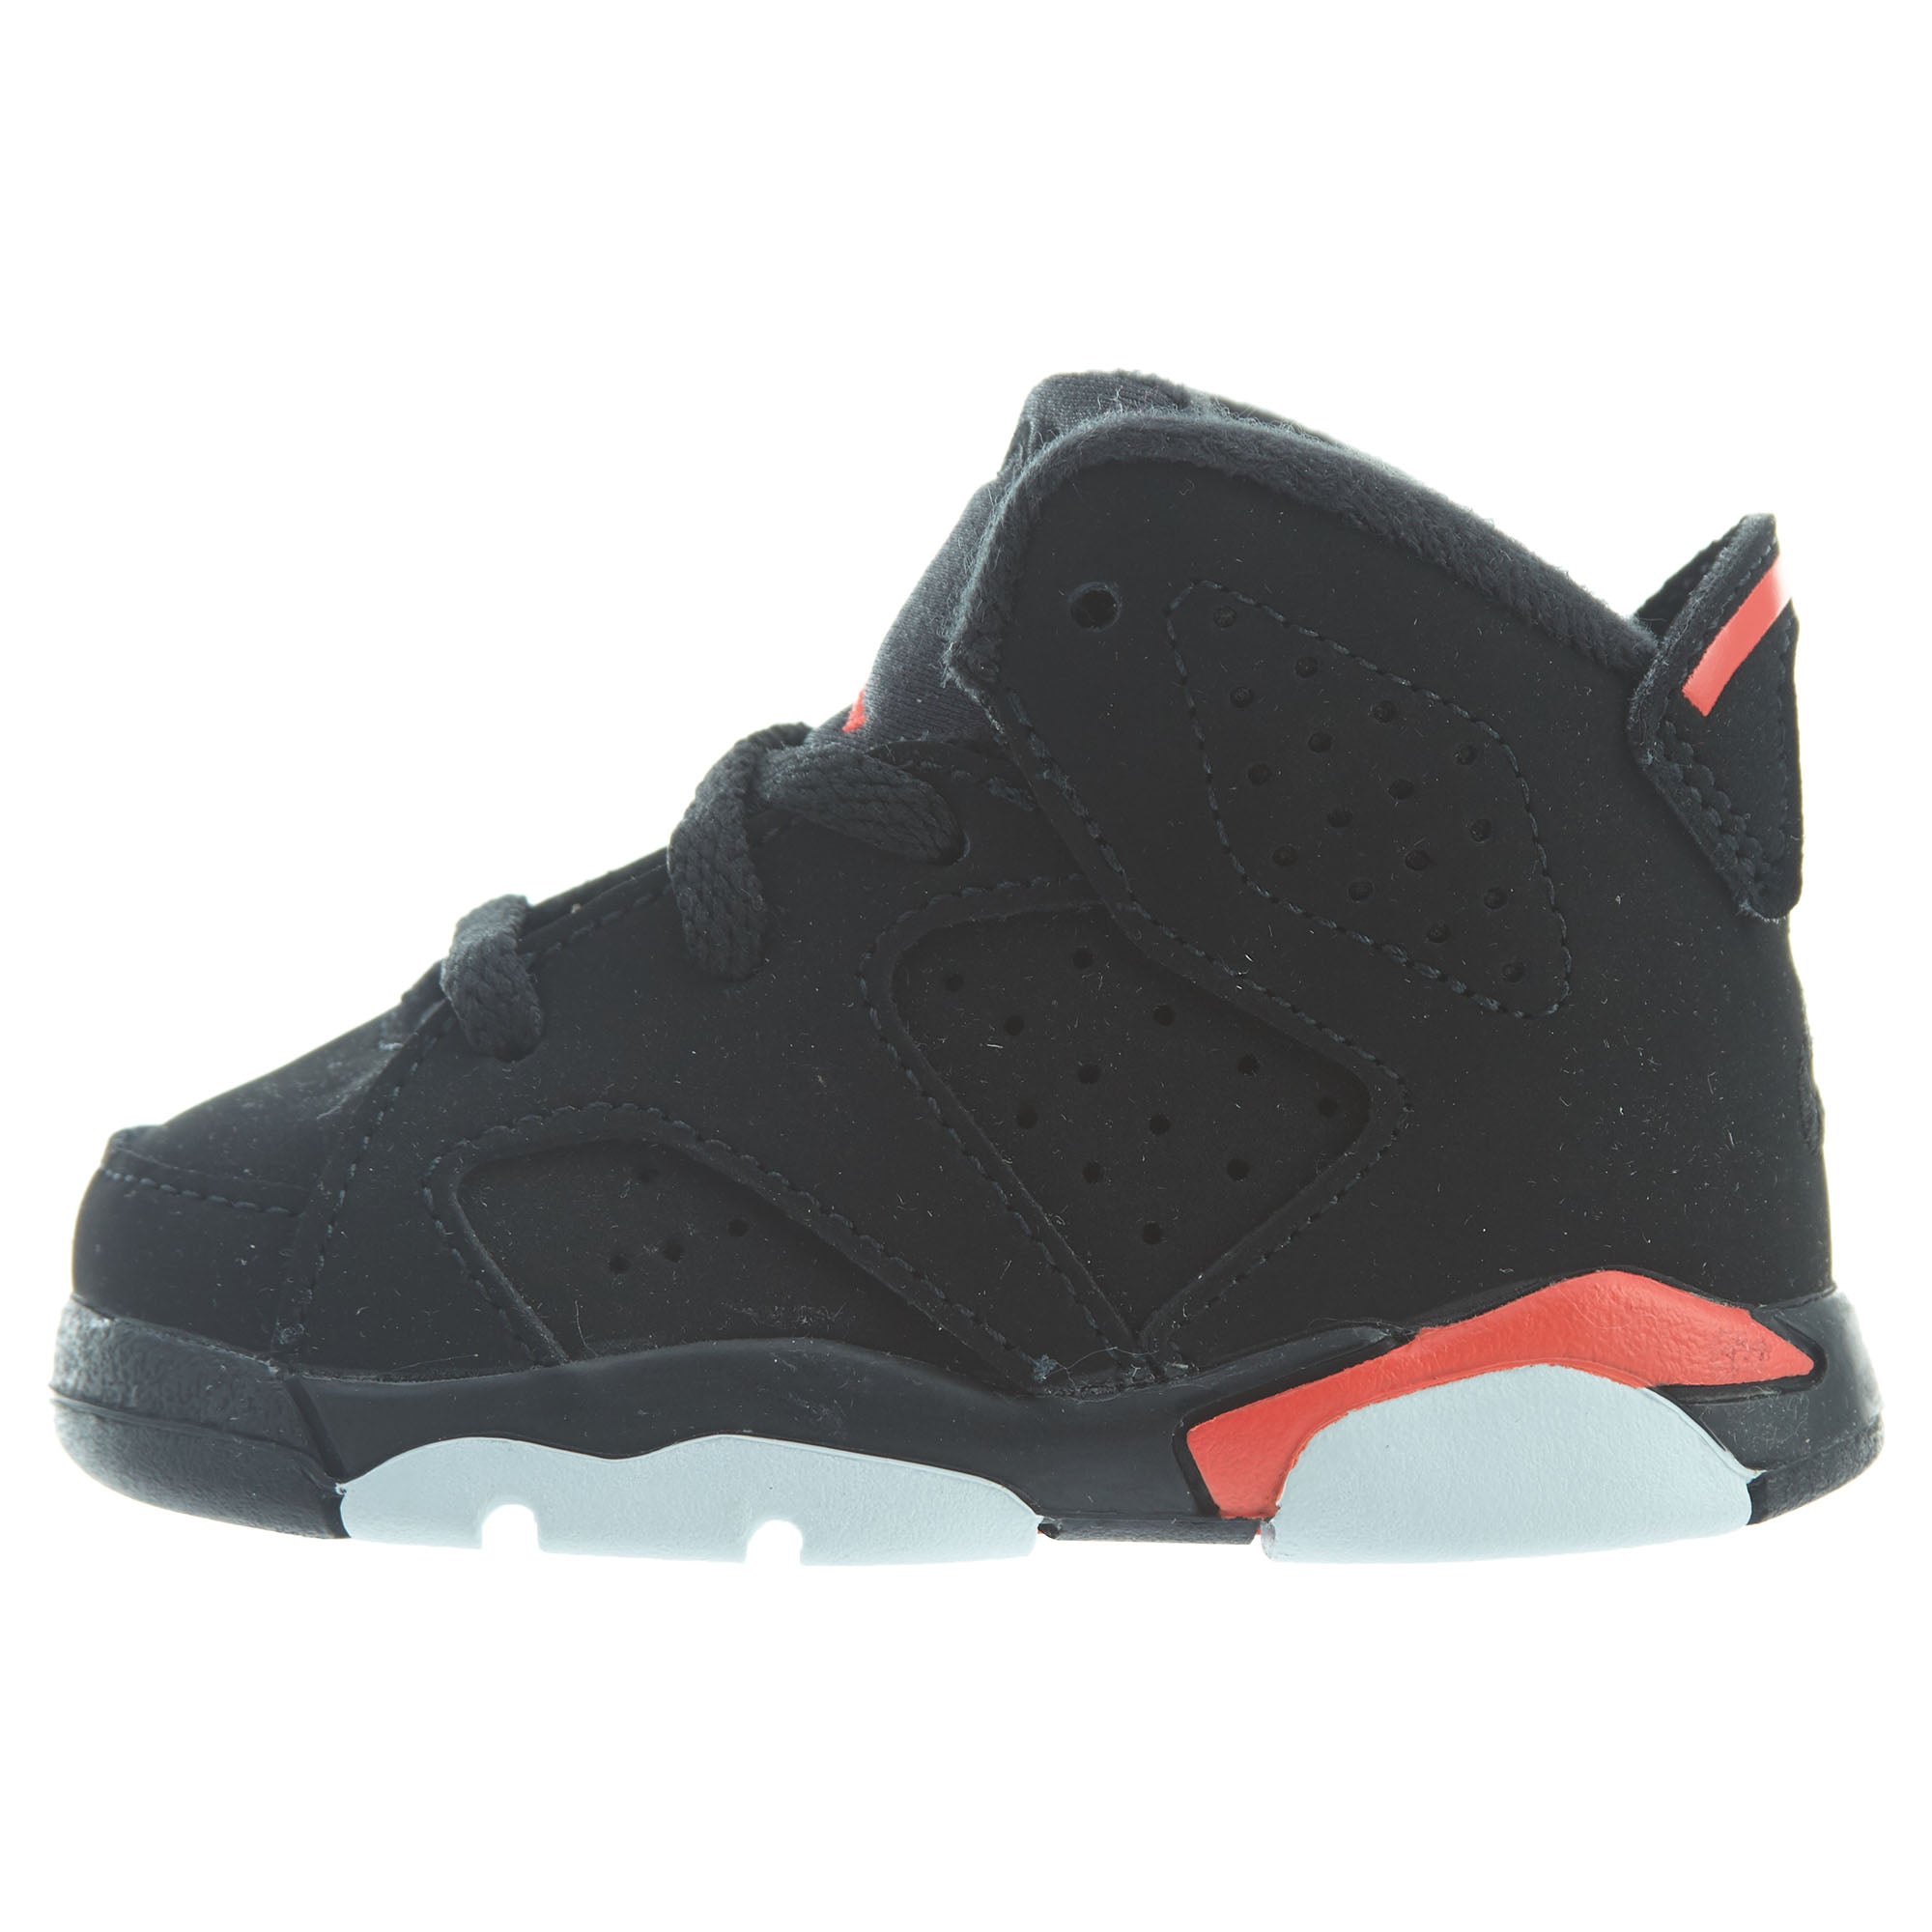 Jordan 6 Retro Basketball Shoes Toddlers Style # 384667-060